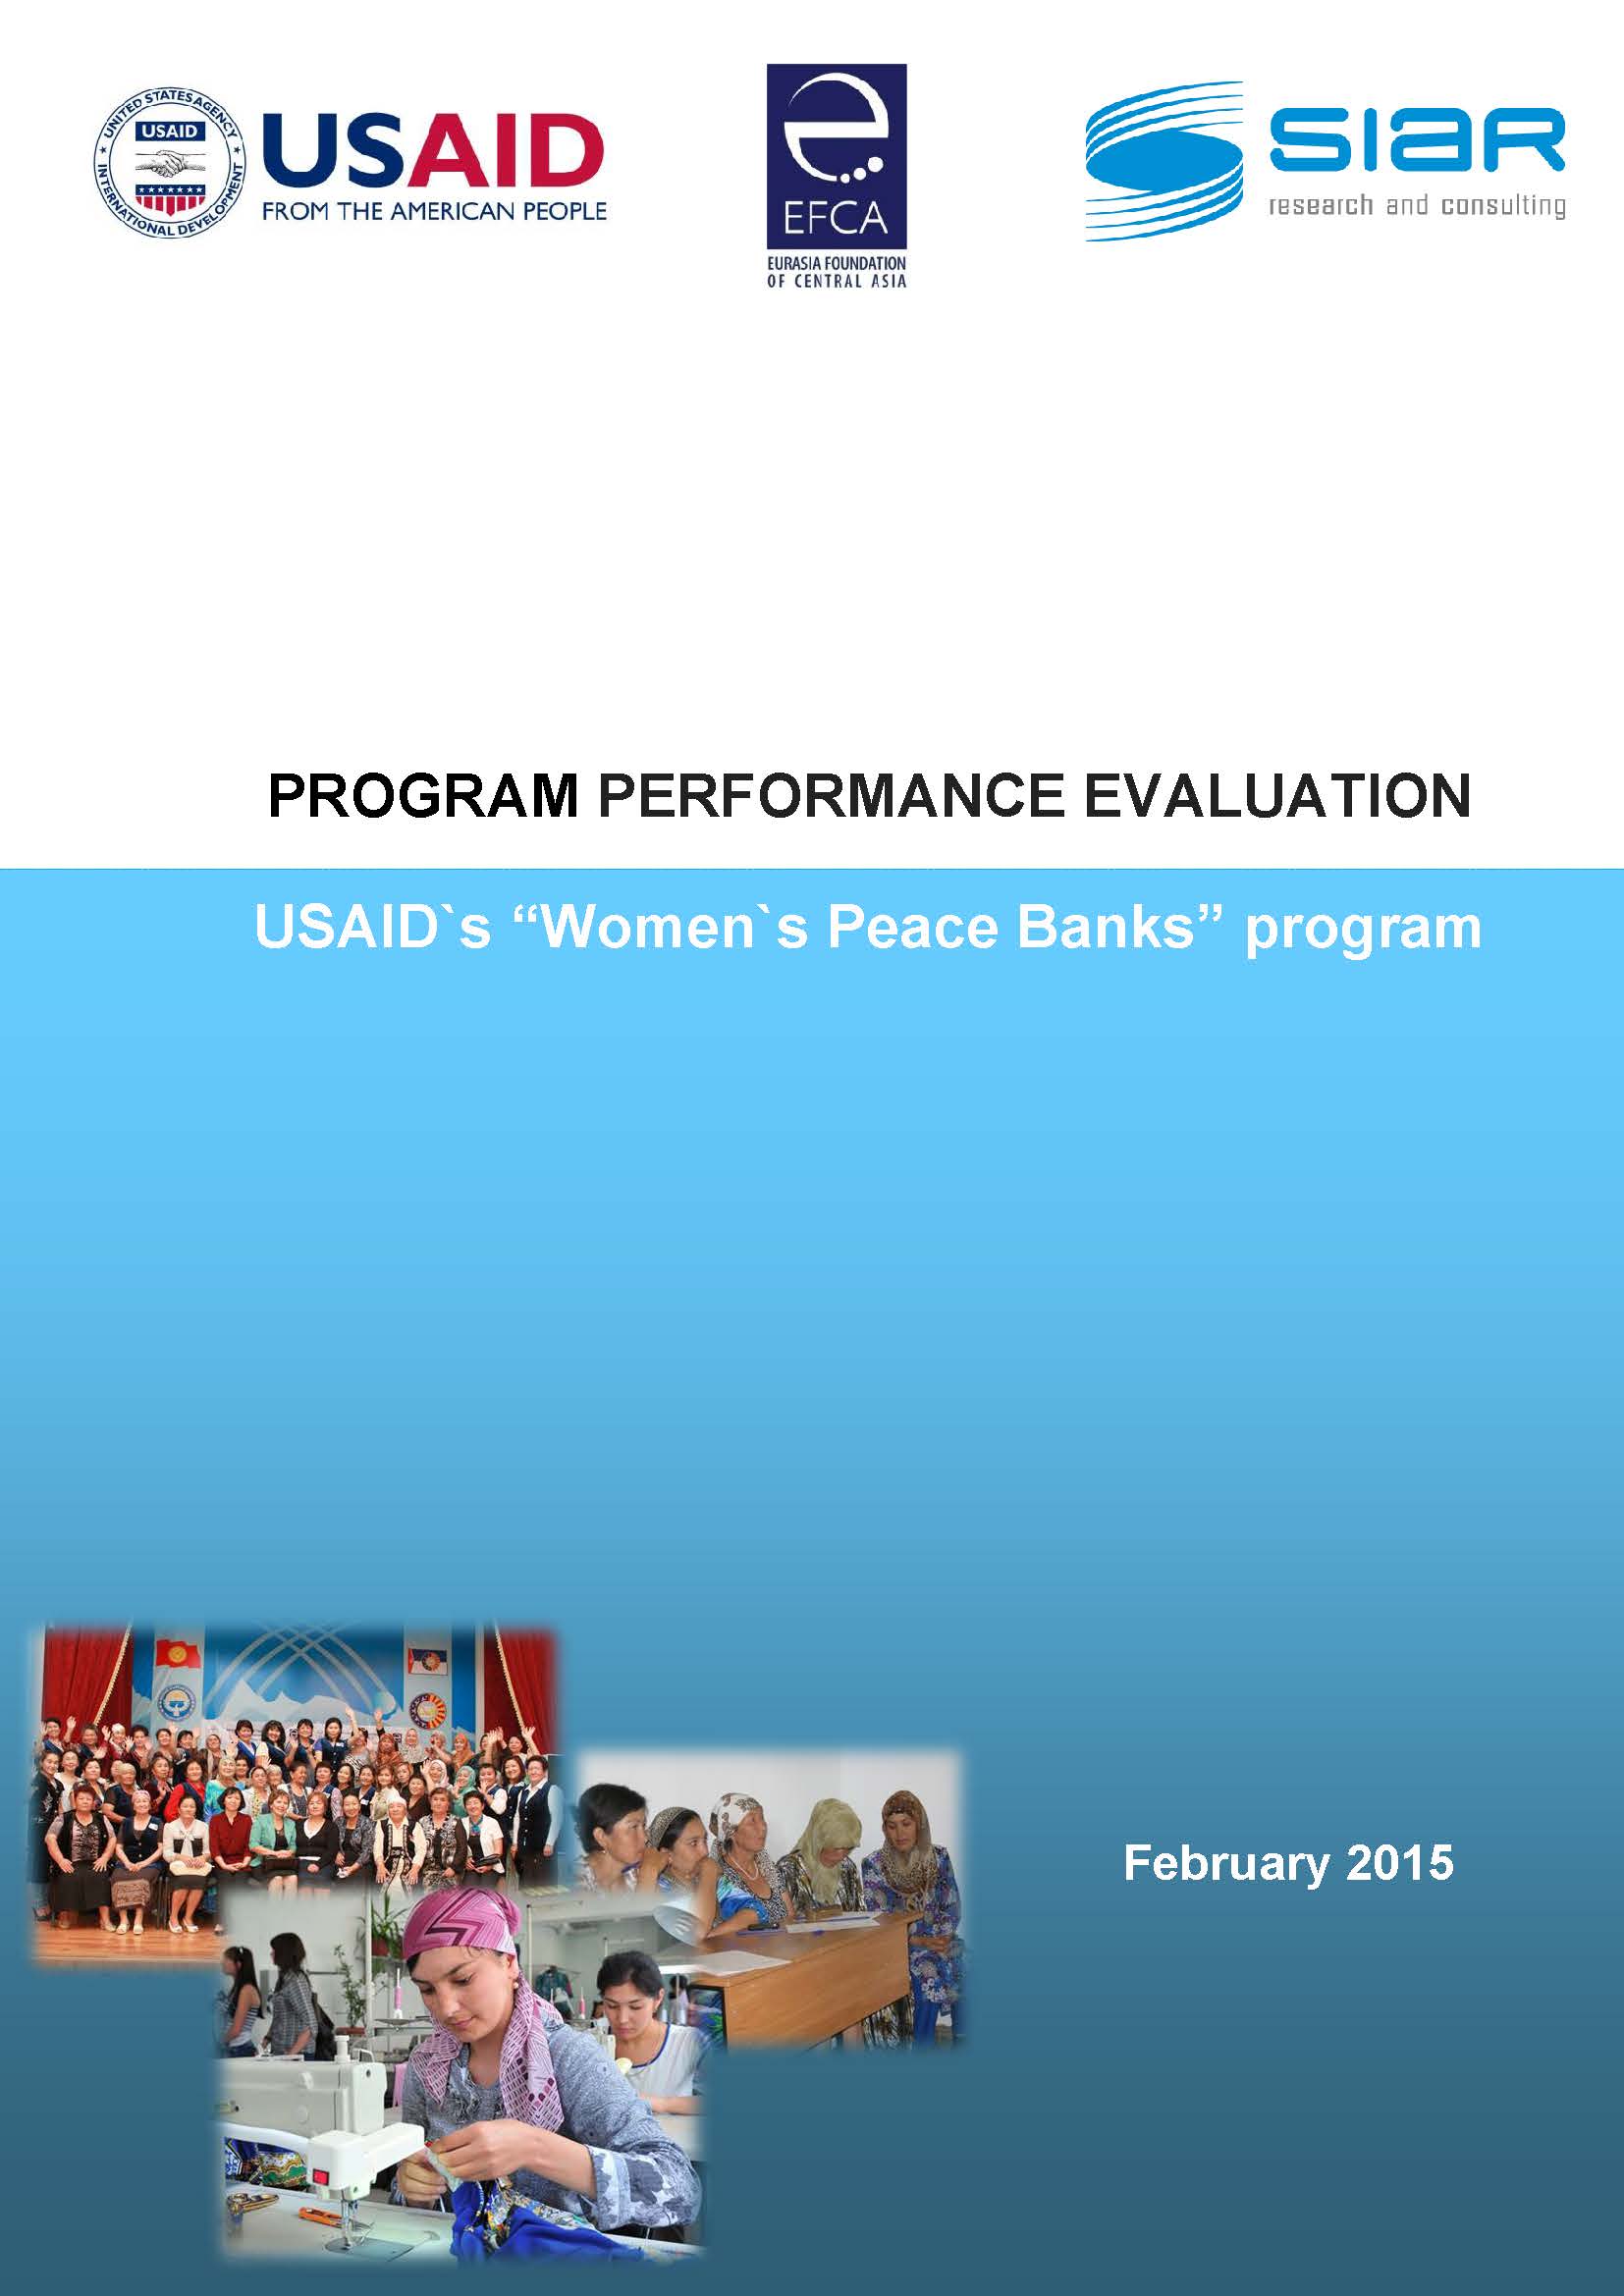 PROGRAM PERFORMANCE EVALUATION: Women's Peace Banks